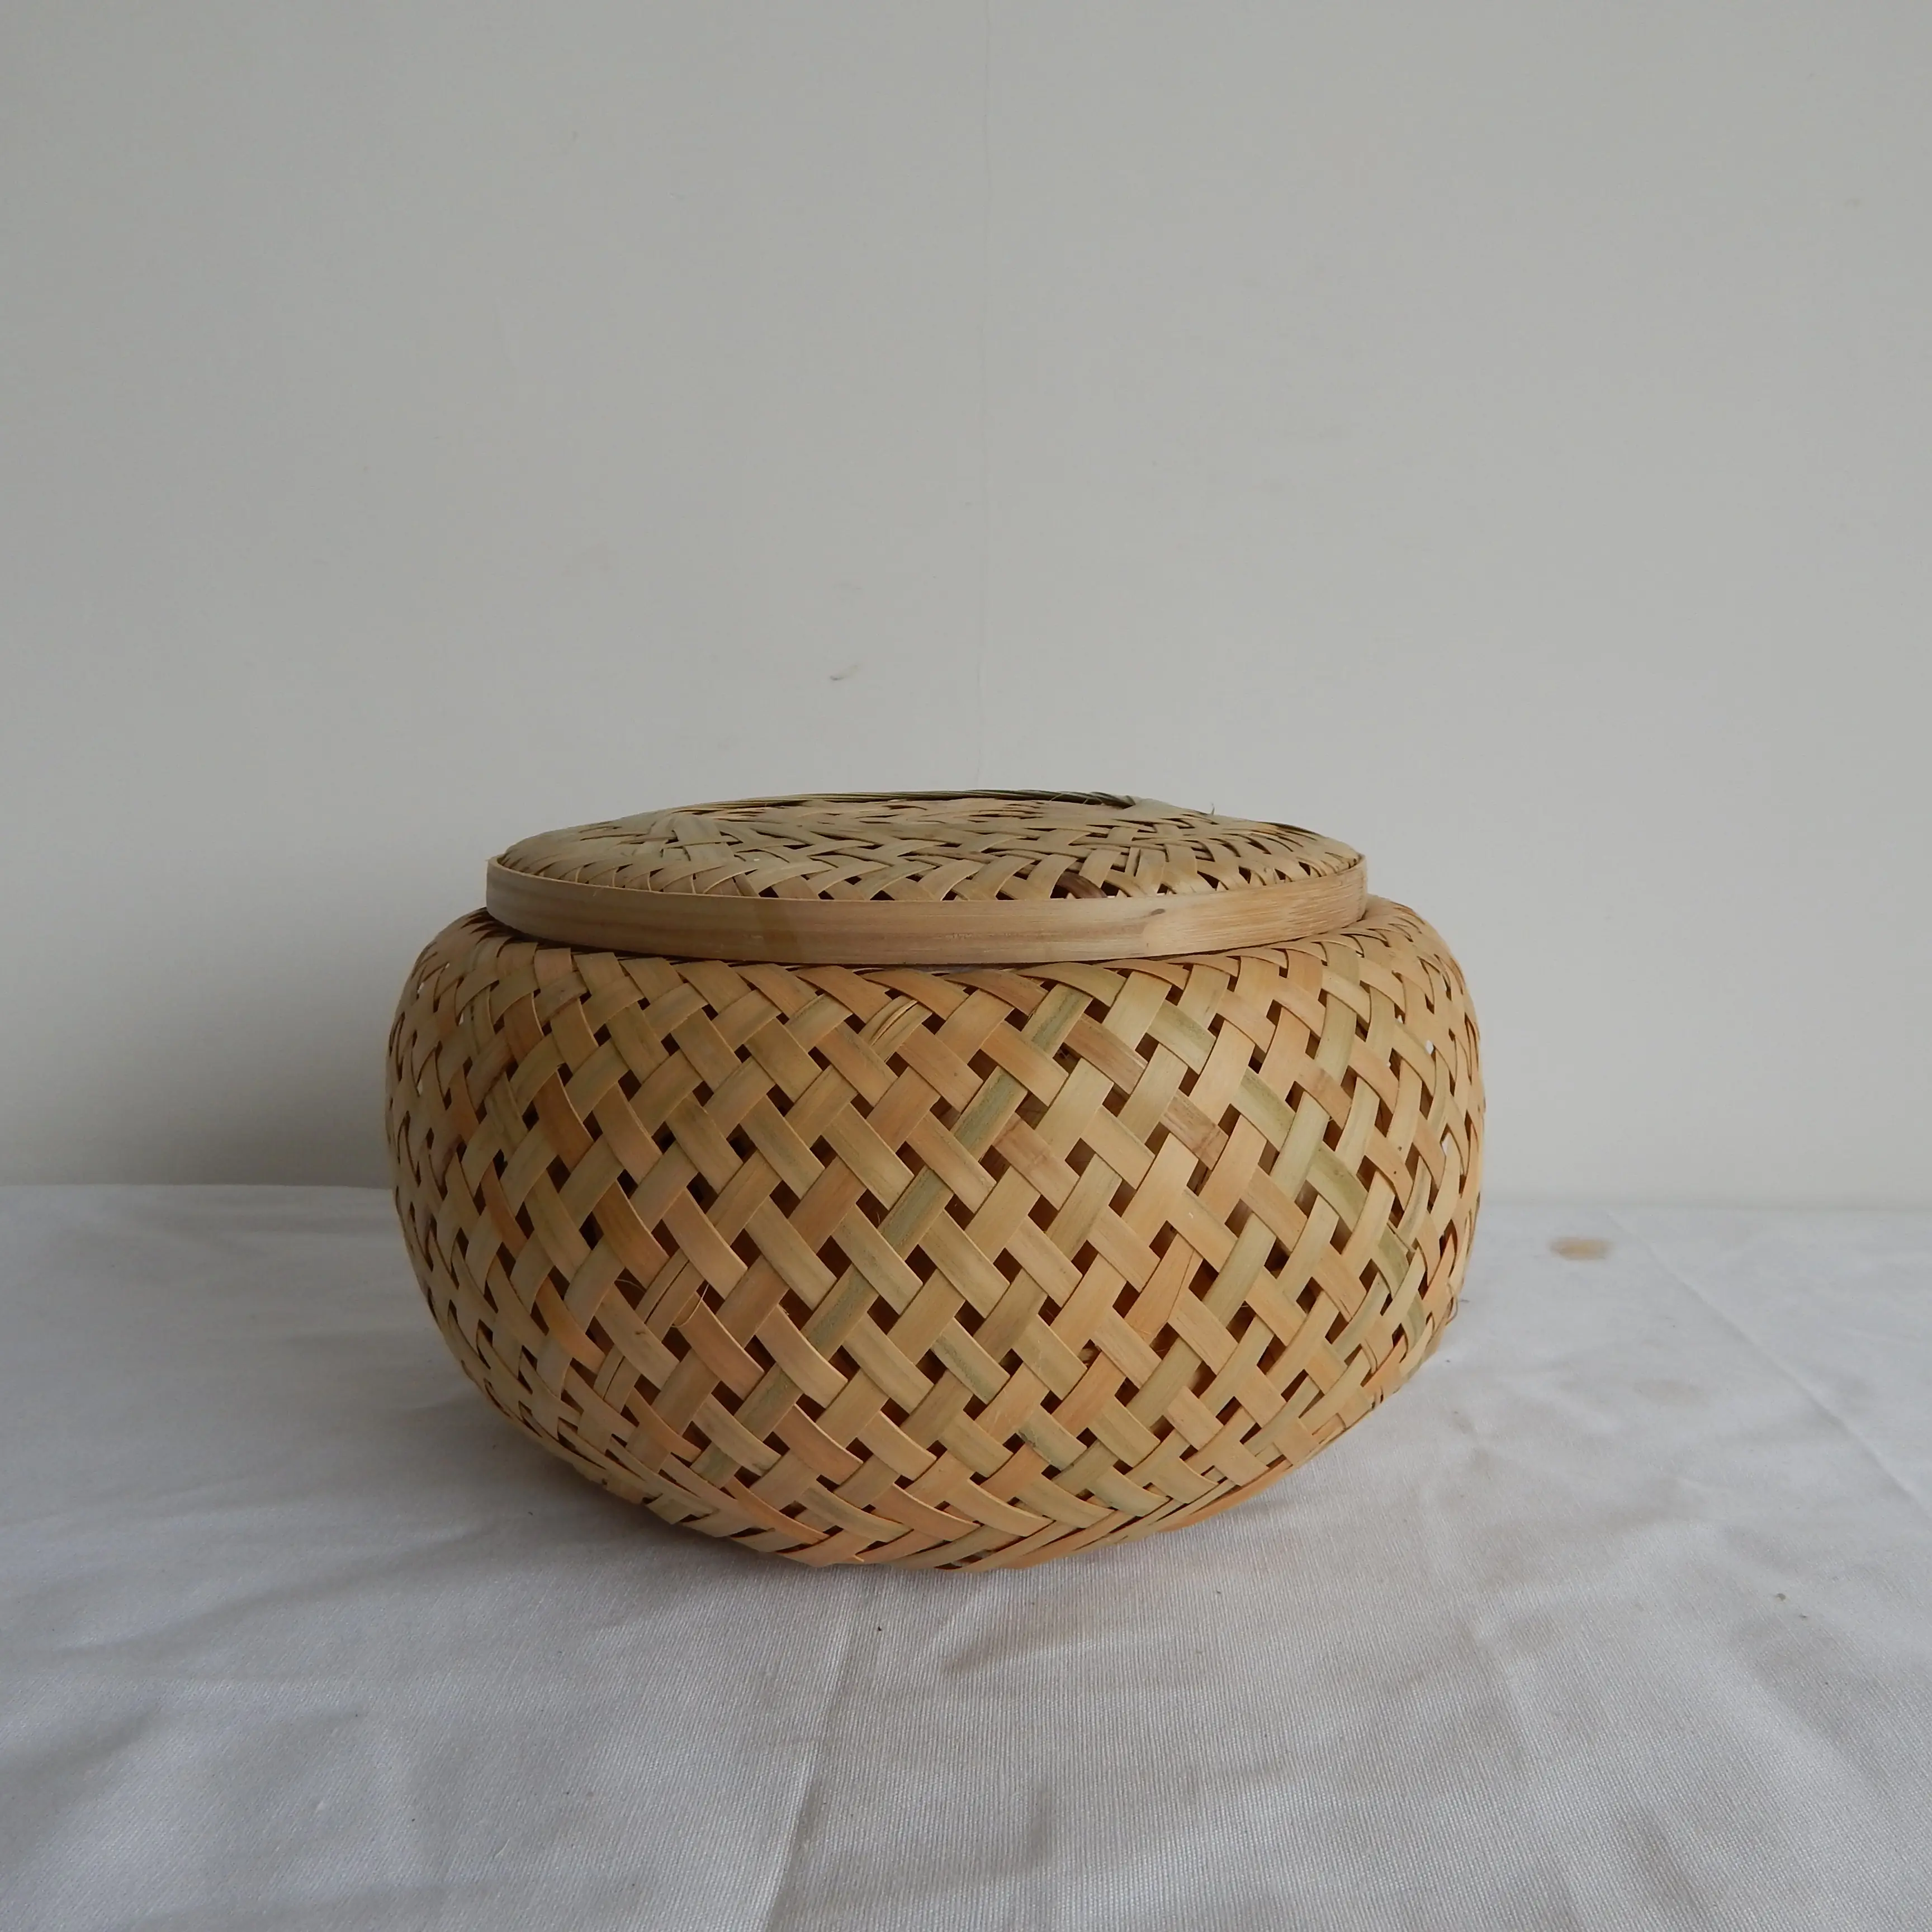 Hot Selling Handmade Living Room Snack Vegetable Bowl Fruit Basket Bamboo Picnic Tray Food Bamboo Basket